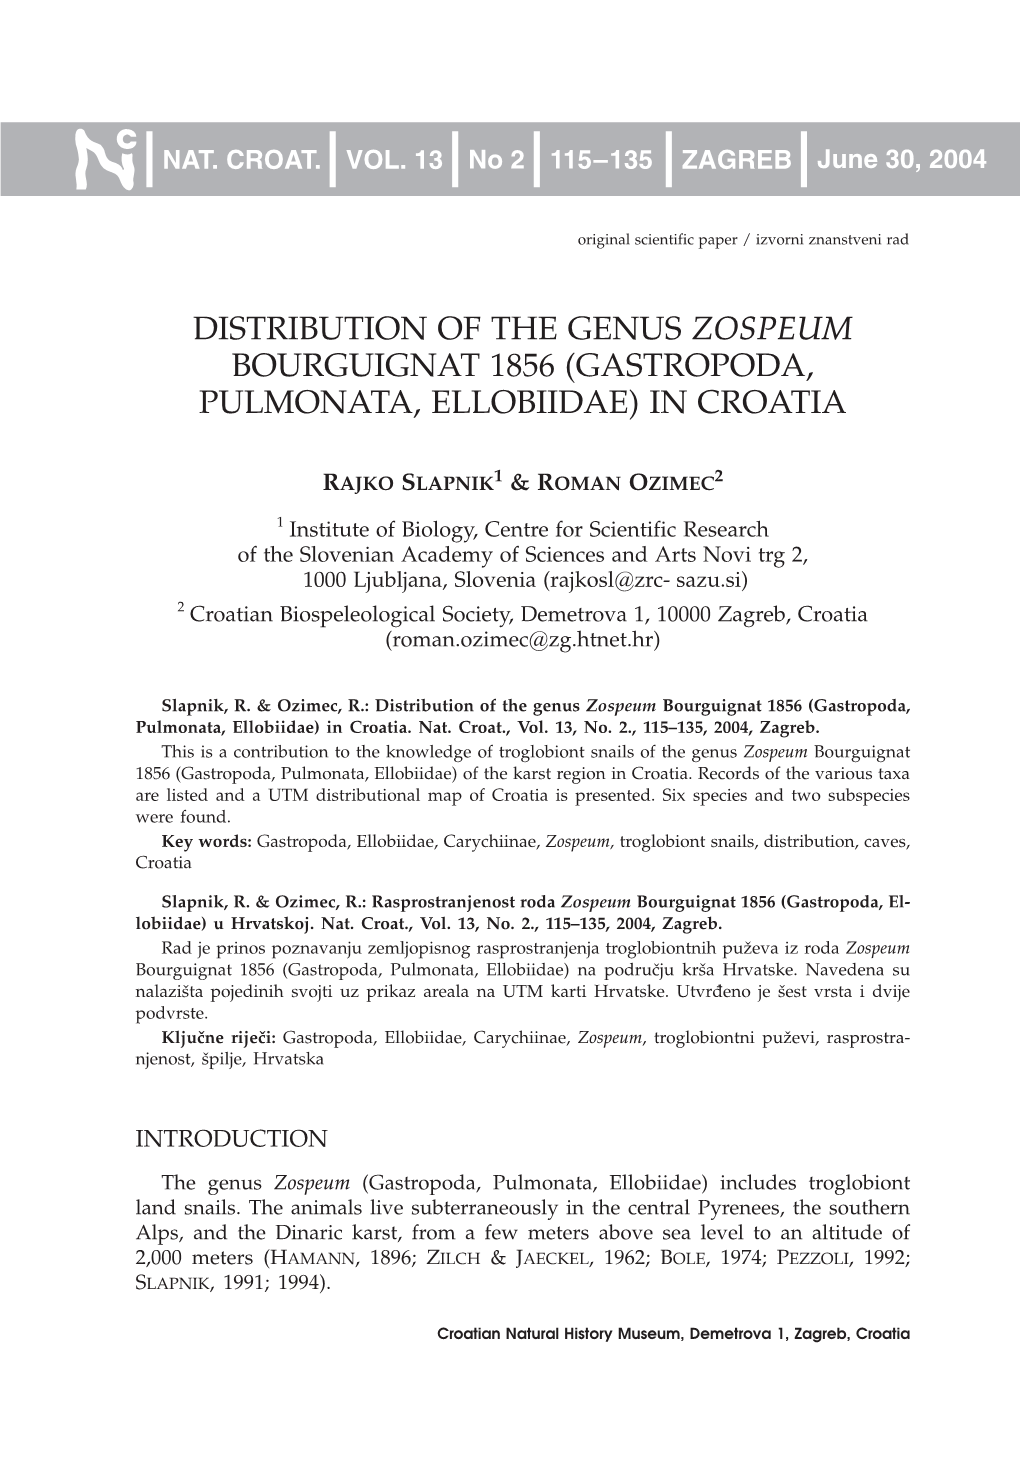 Distribution of the Genus Zospeum Bourguignat 1856 (Gastropoda, Pulmonata, Ellobiidae) in Croatia